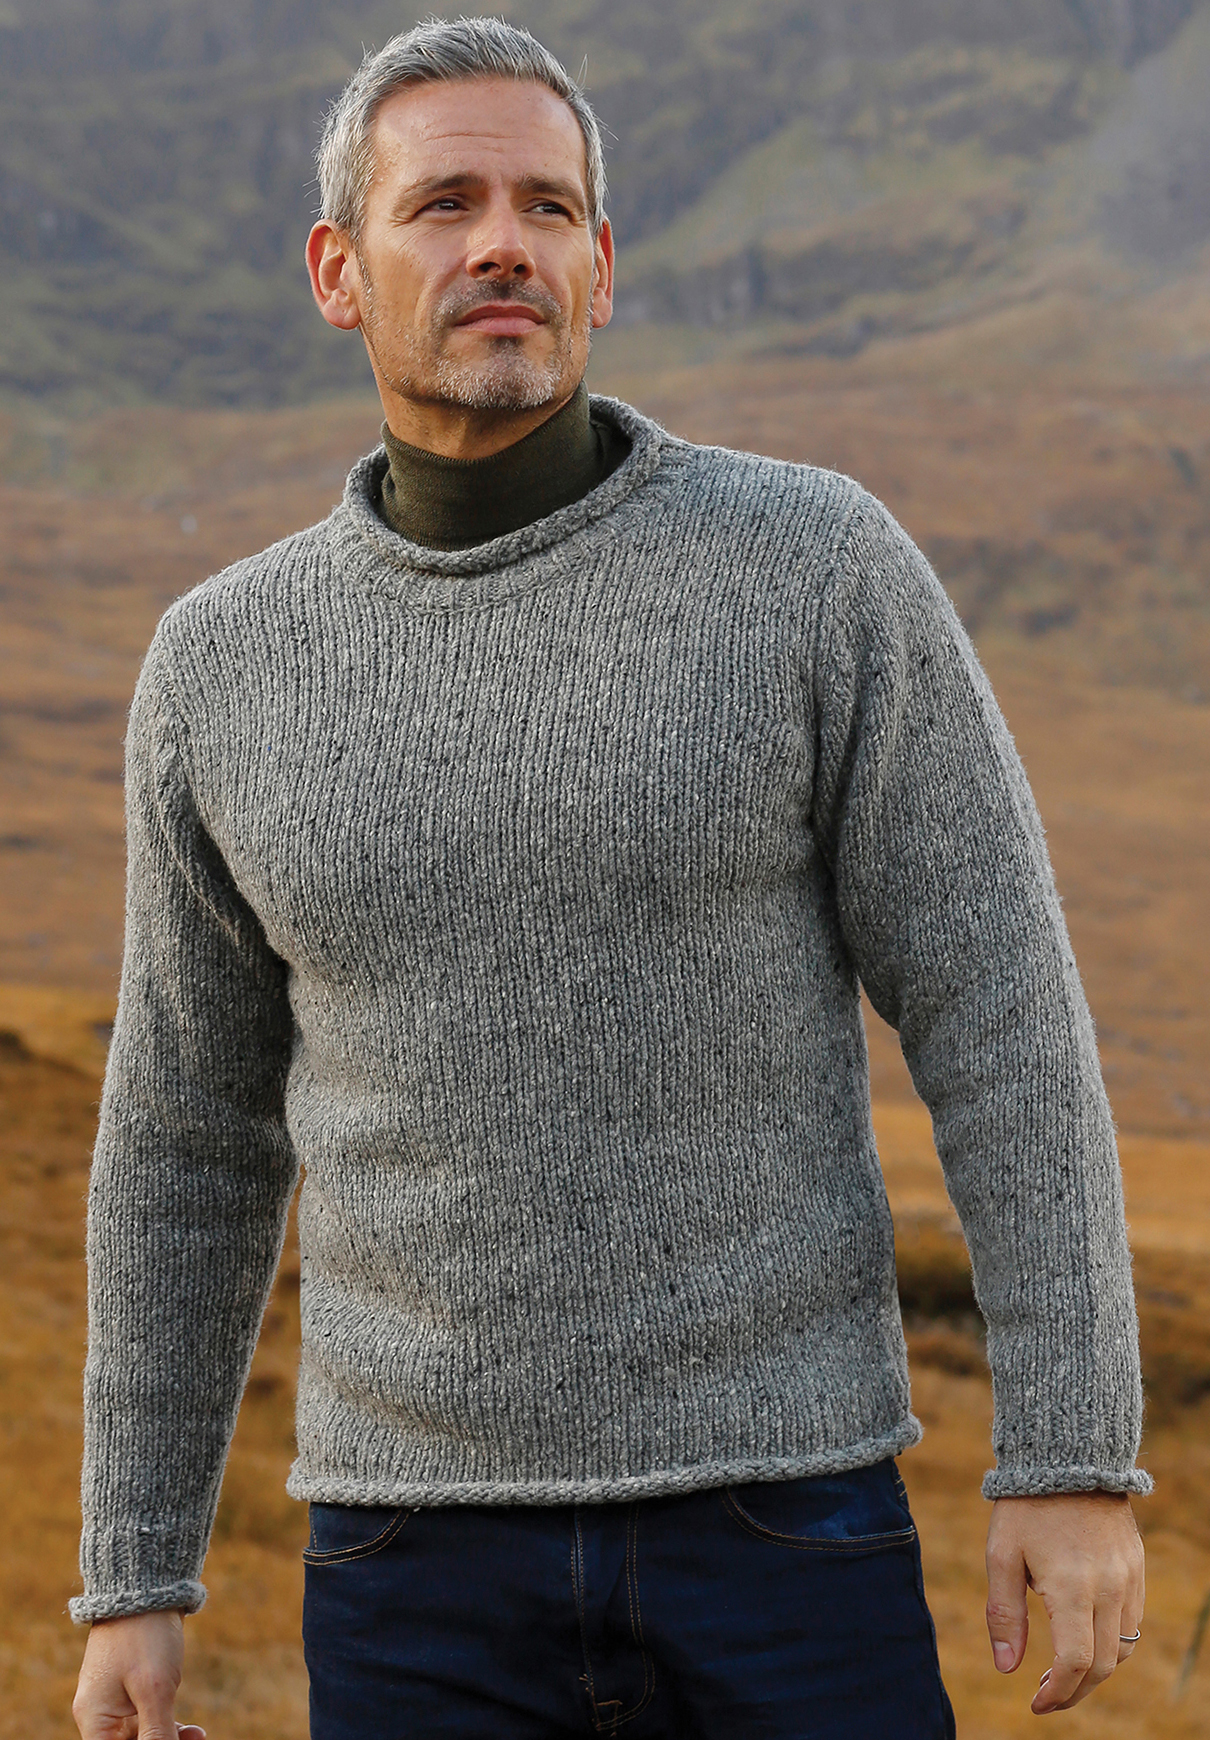 Carraig Donn Irish Aran Mens Wool Sweater Roll Collar 
Curl Neck Crew Neck Crewneck Pullover Jumper Sweater Donegal Wool